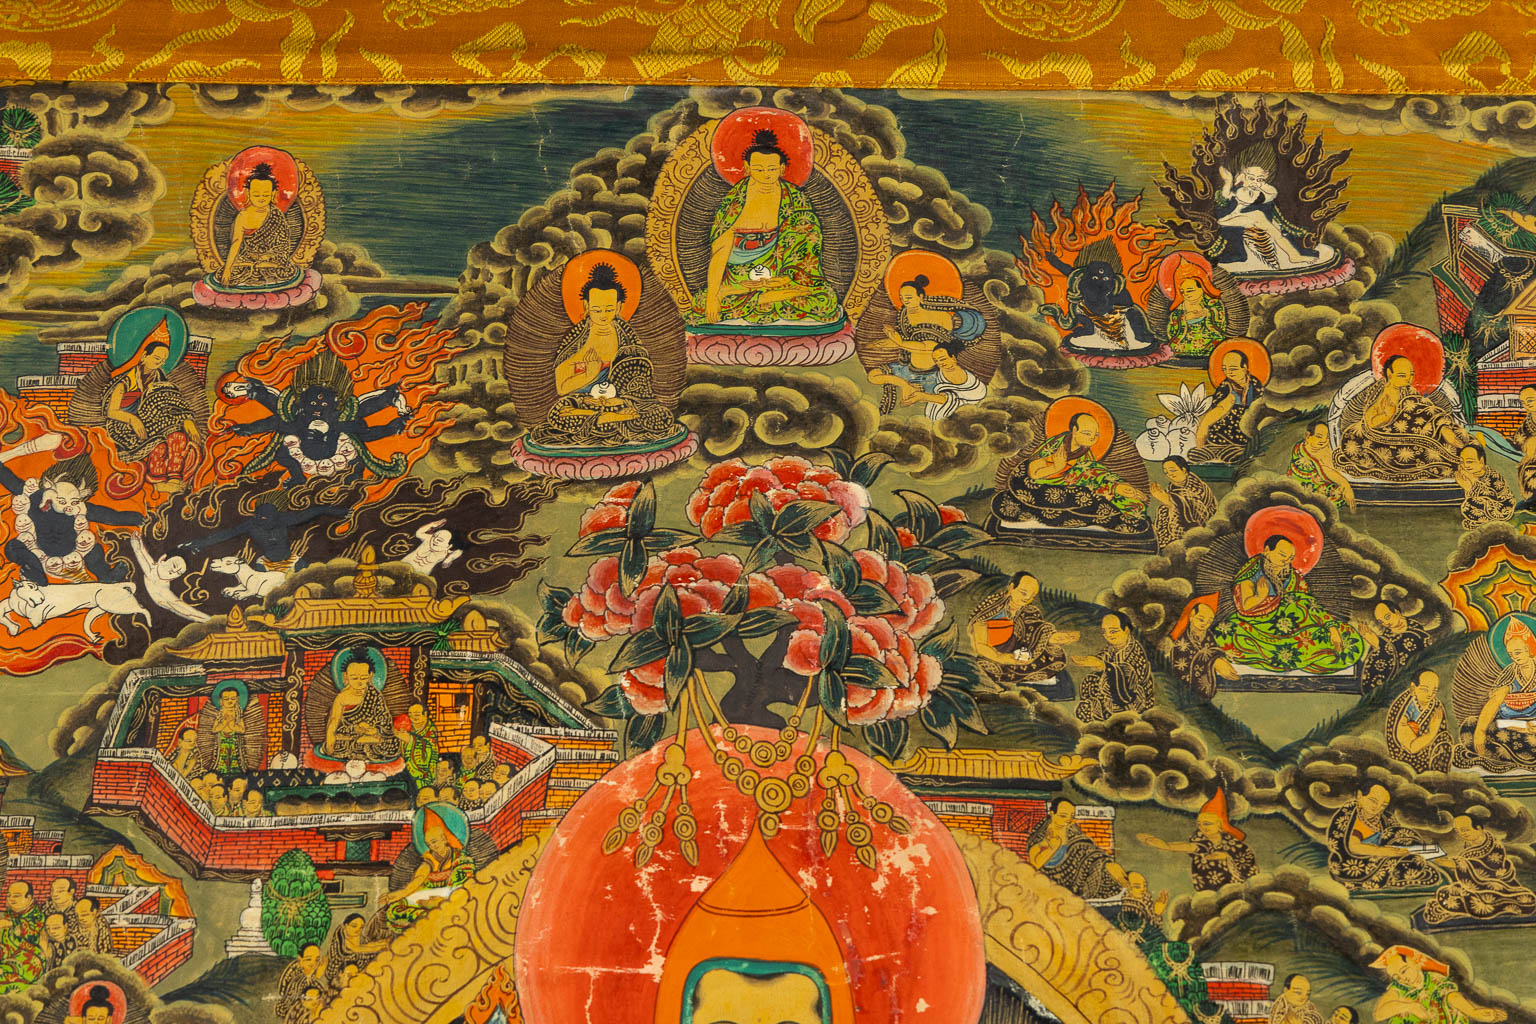 An Oriental thankga, painted on silk. (W:79 x H:127 cm)